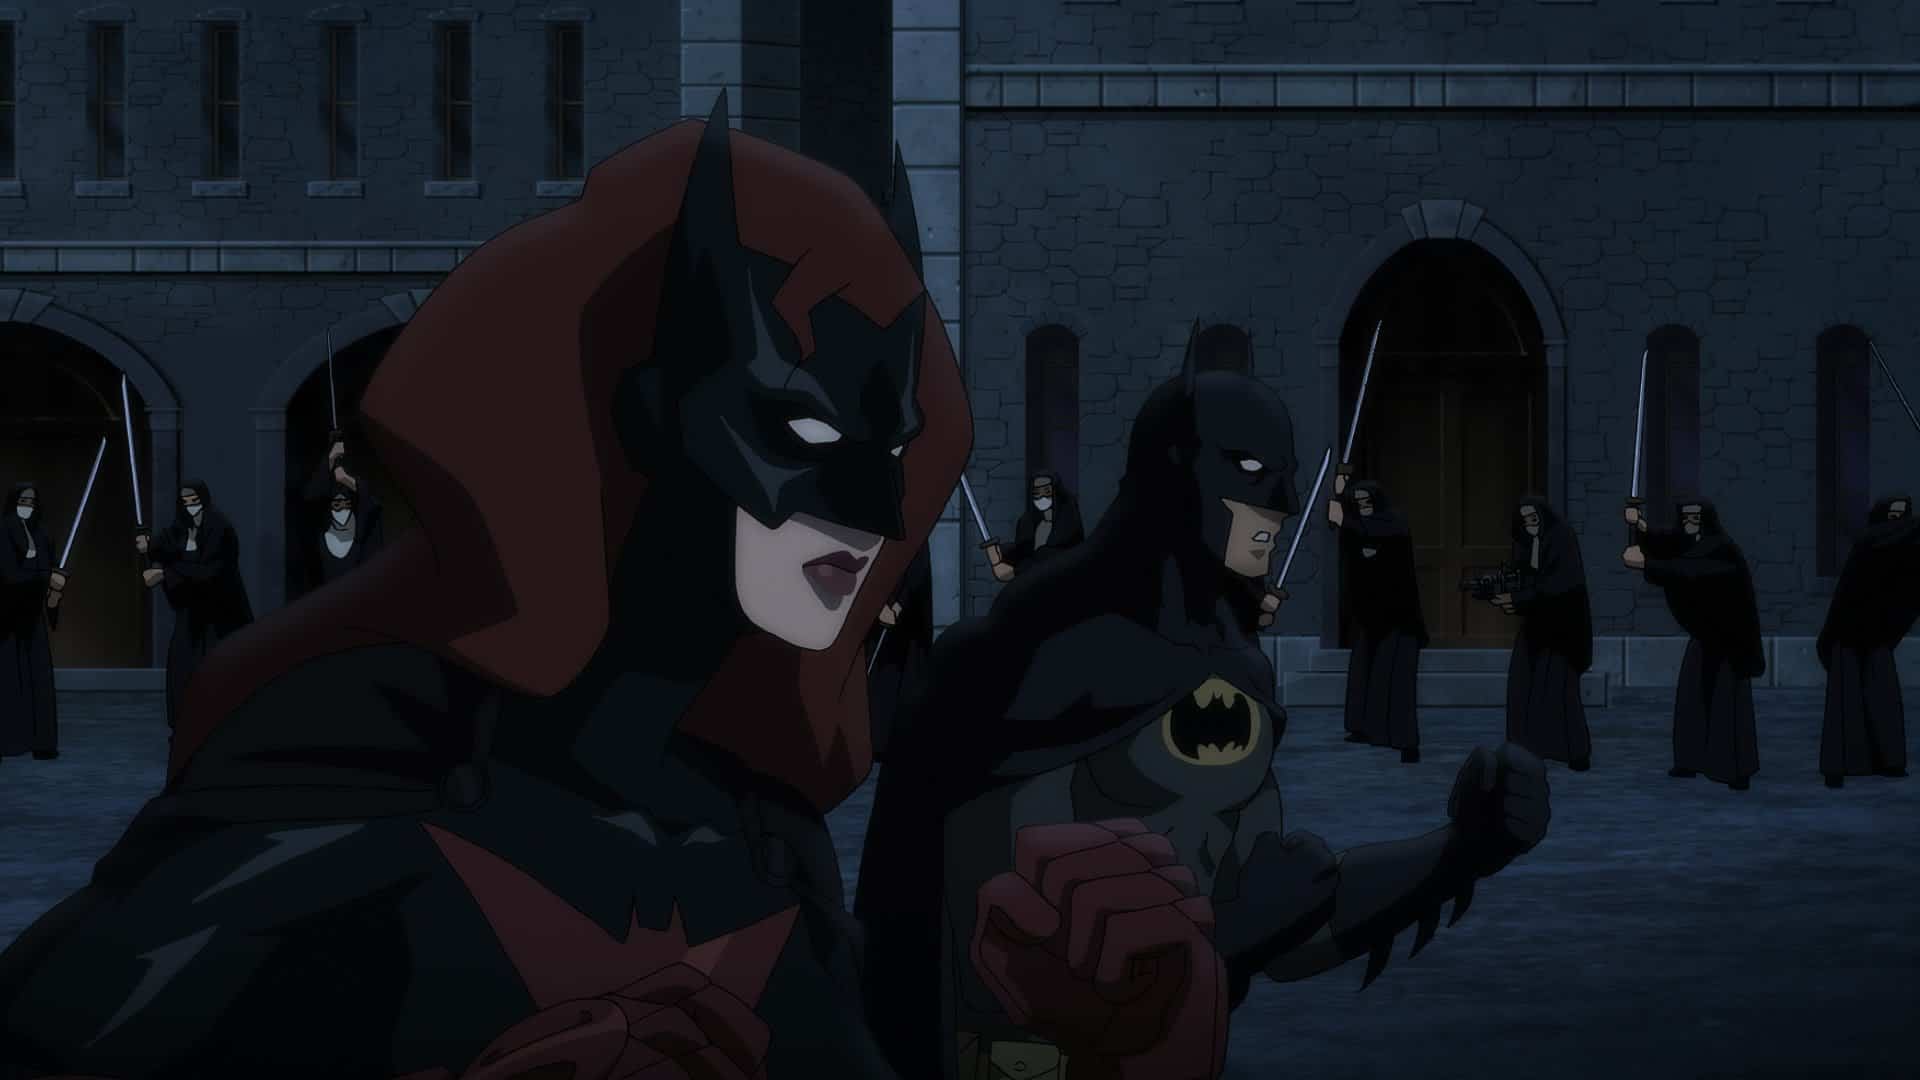 Batman and Batwoman versus Nunjas (Ninja Nuns) in "Bad Blood"